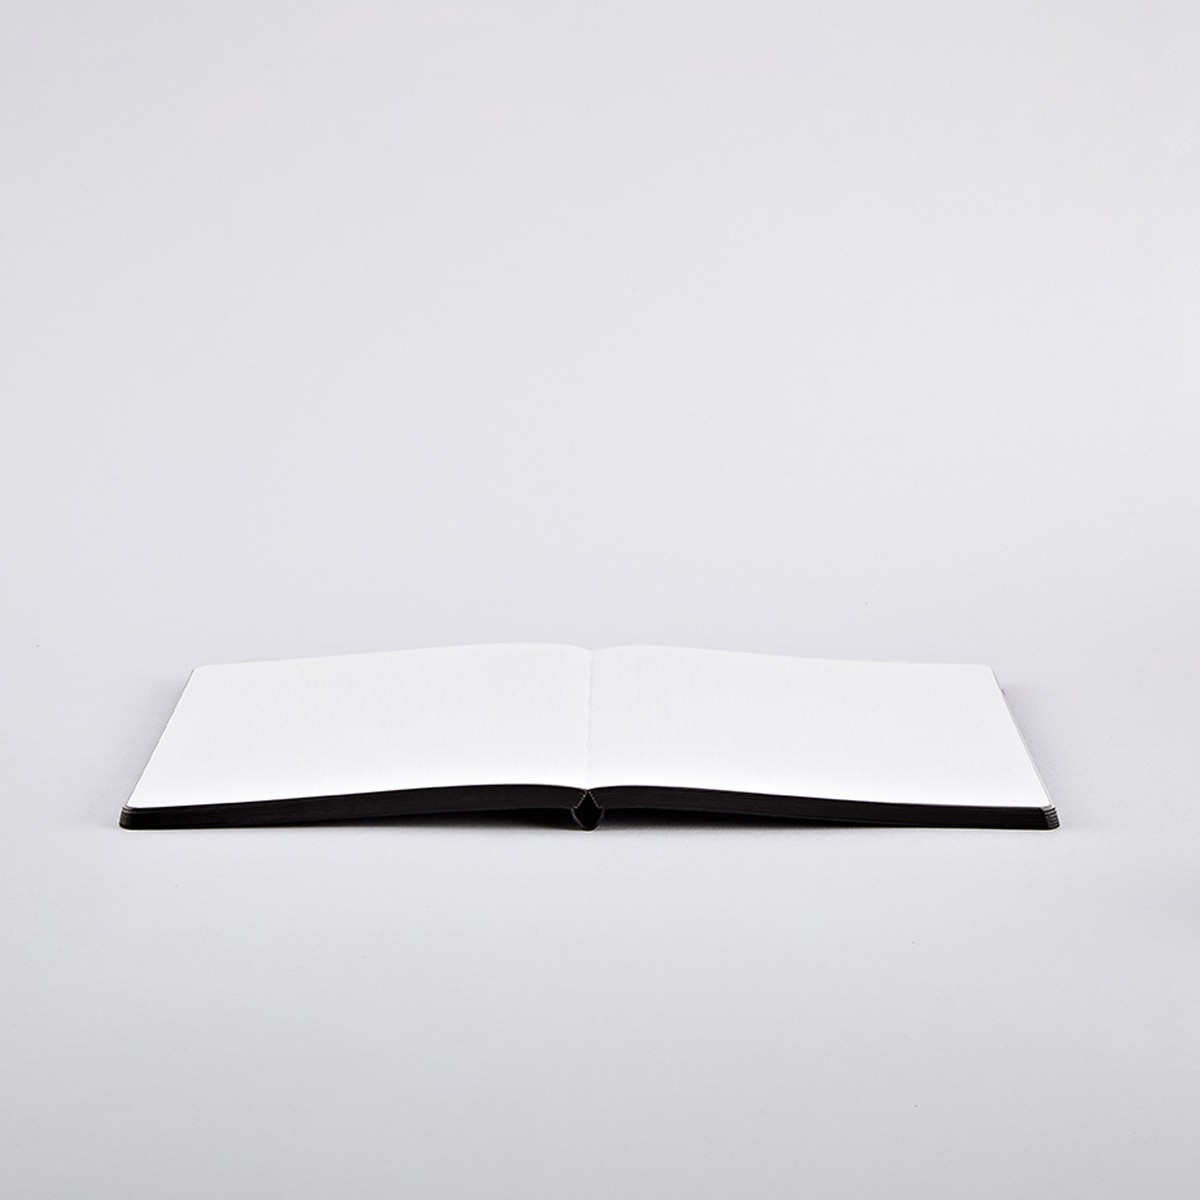 Nuuna Notebook Nightflight L Light - NYC SILVER